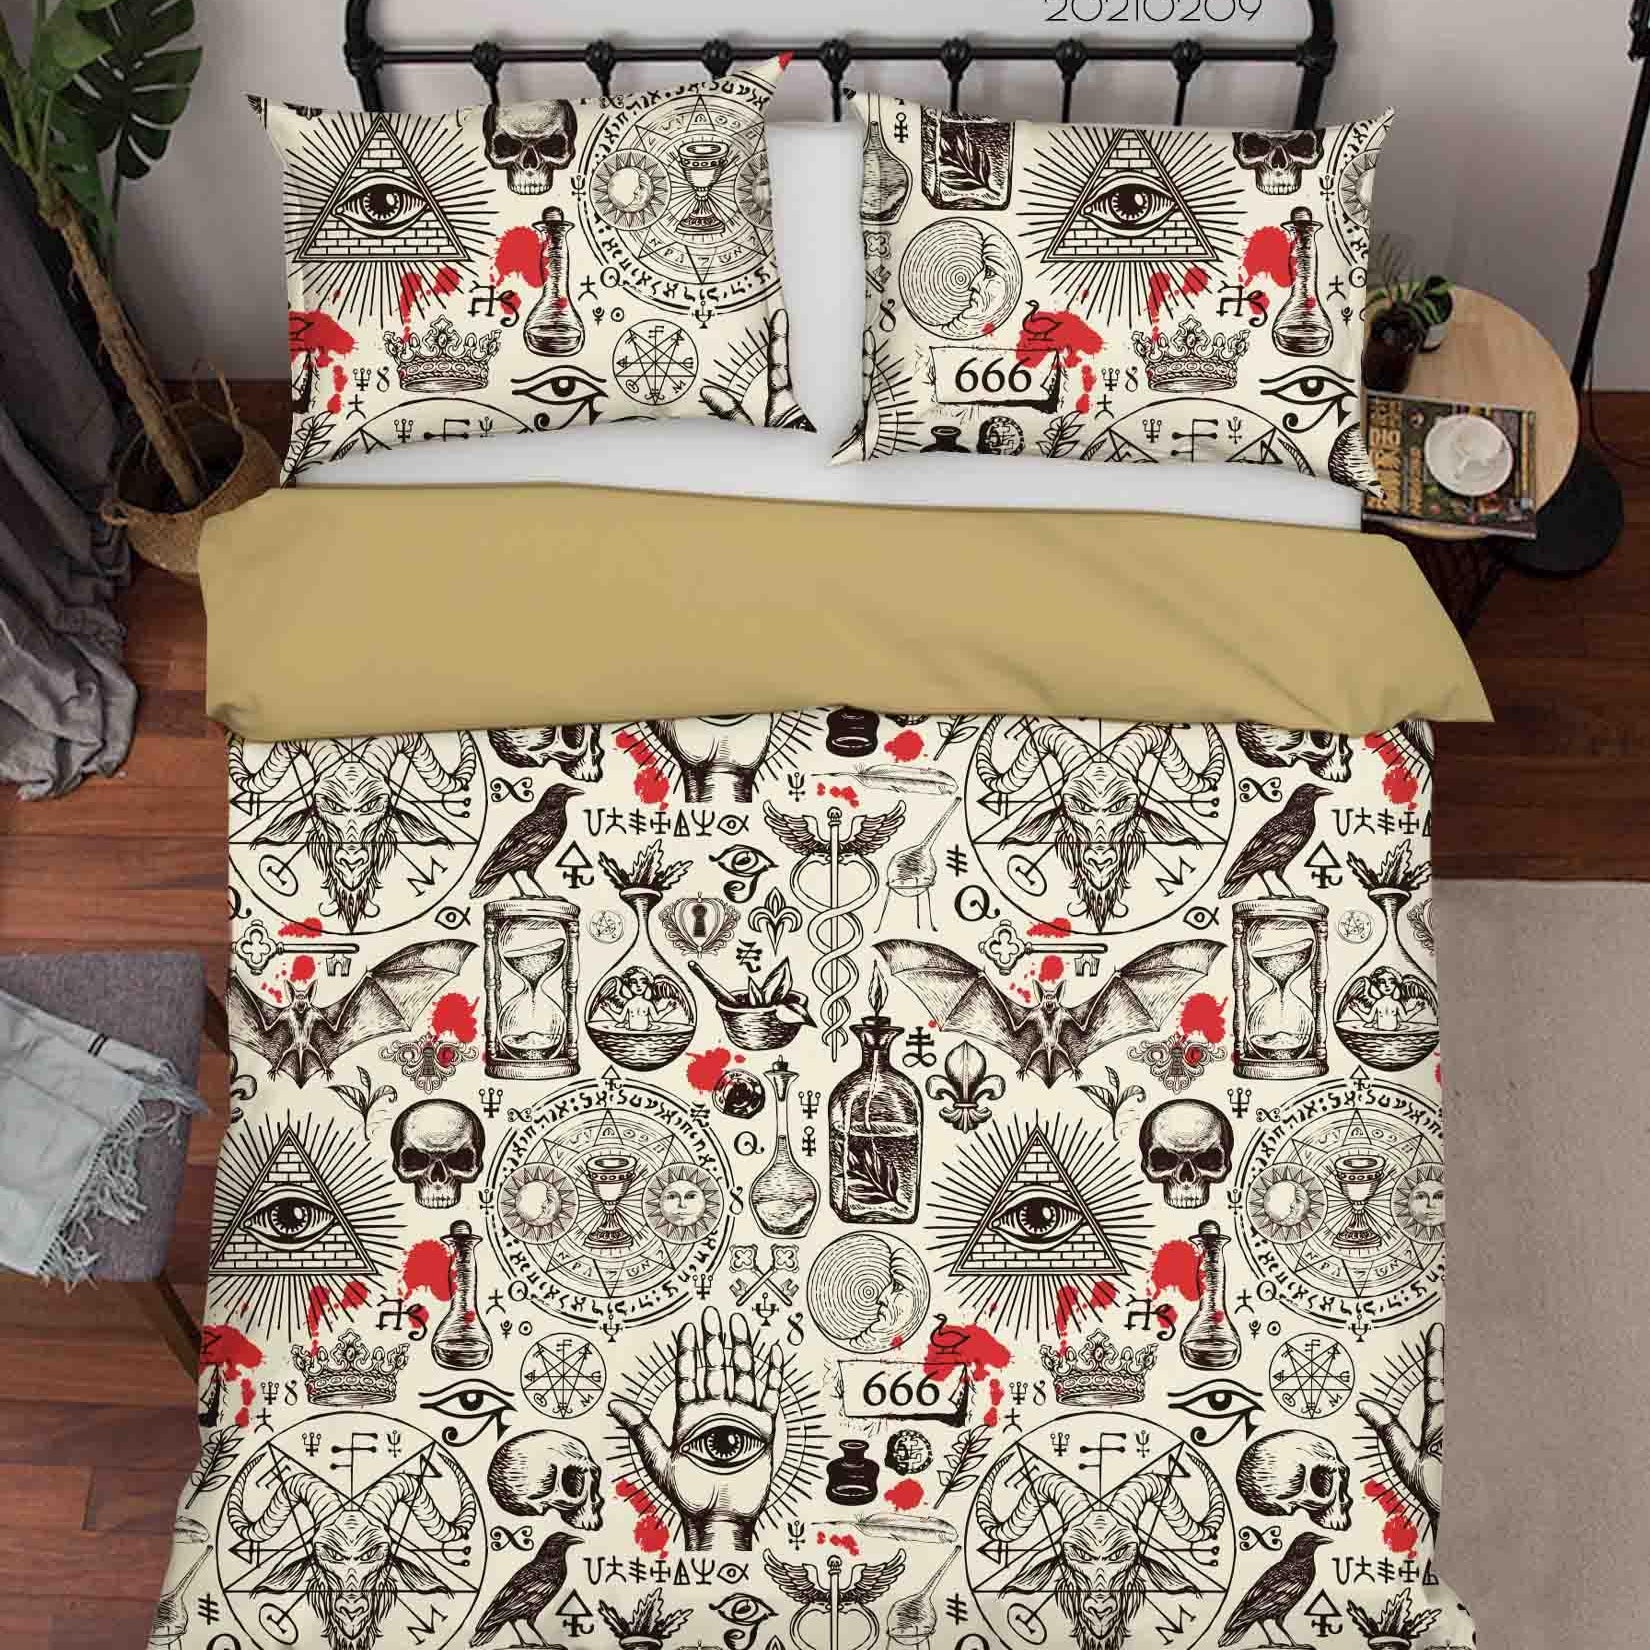 3D Abstract Animal Totem Symbol Quilt Cover Set Bedding Set Duvet Cover Pillowcases 46- Jess Art Decoration